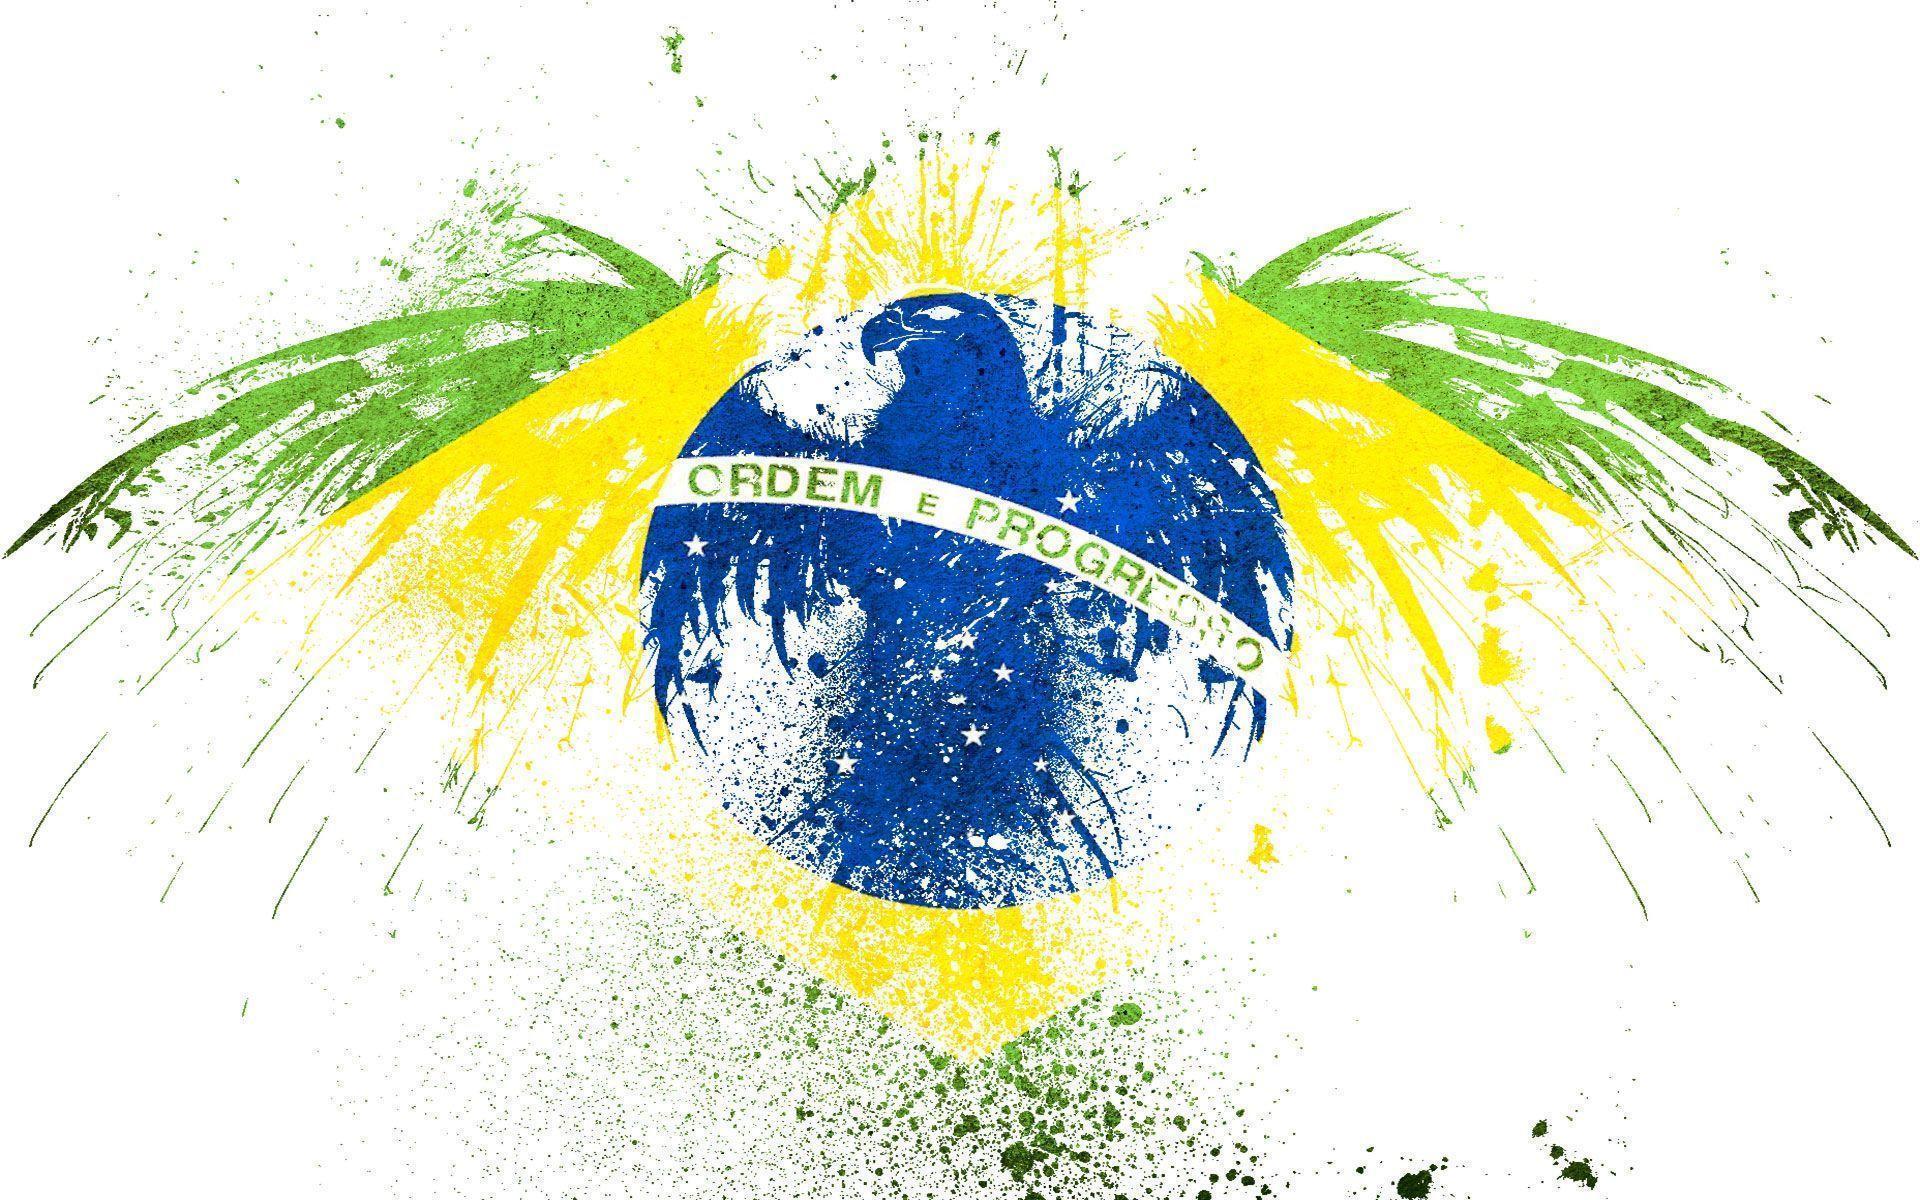 Brazil Football Wallpaper